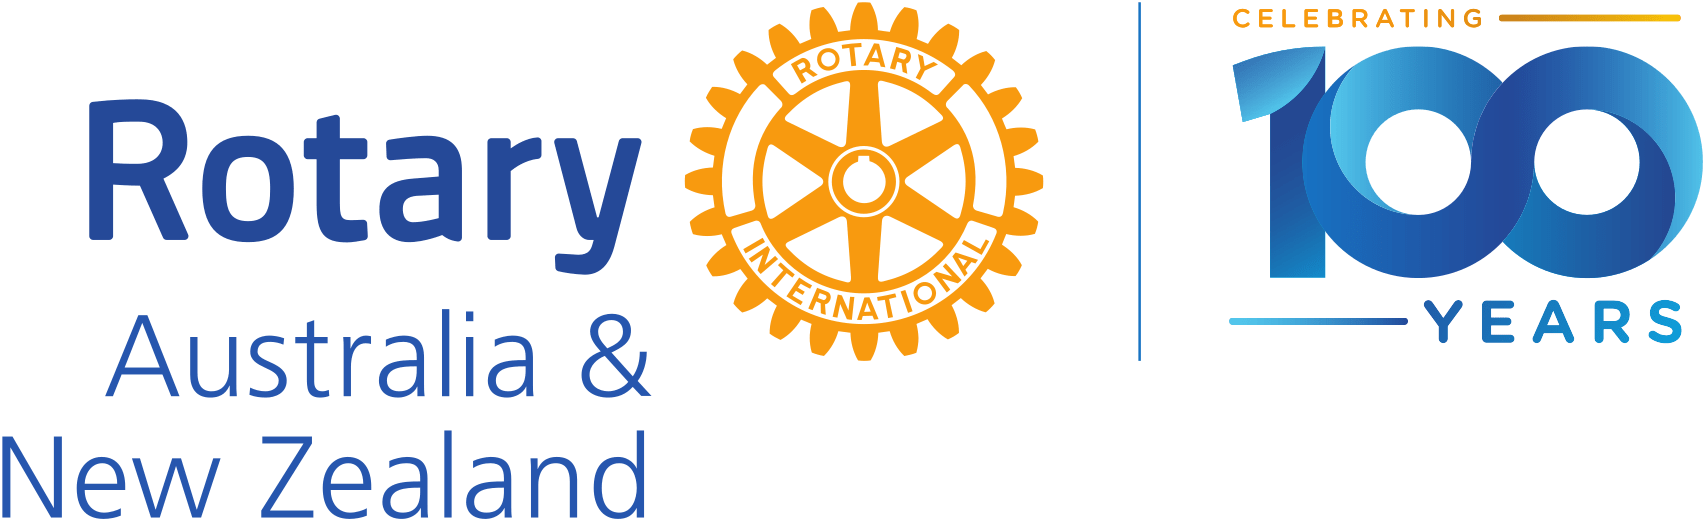 100 Years of Rotary in Australia